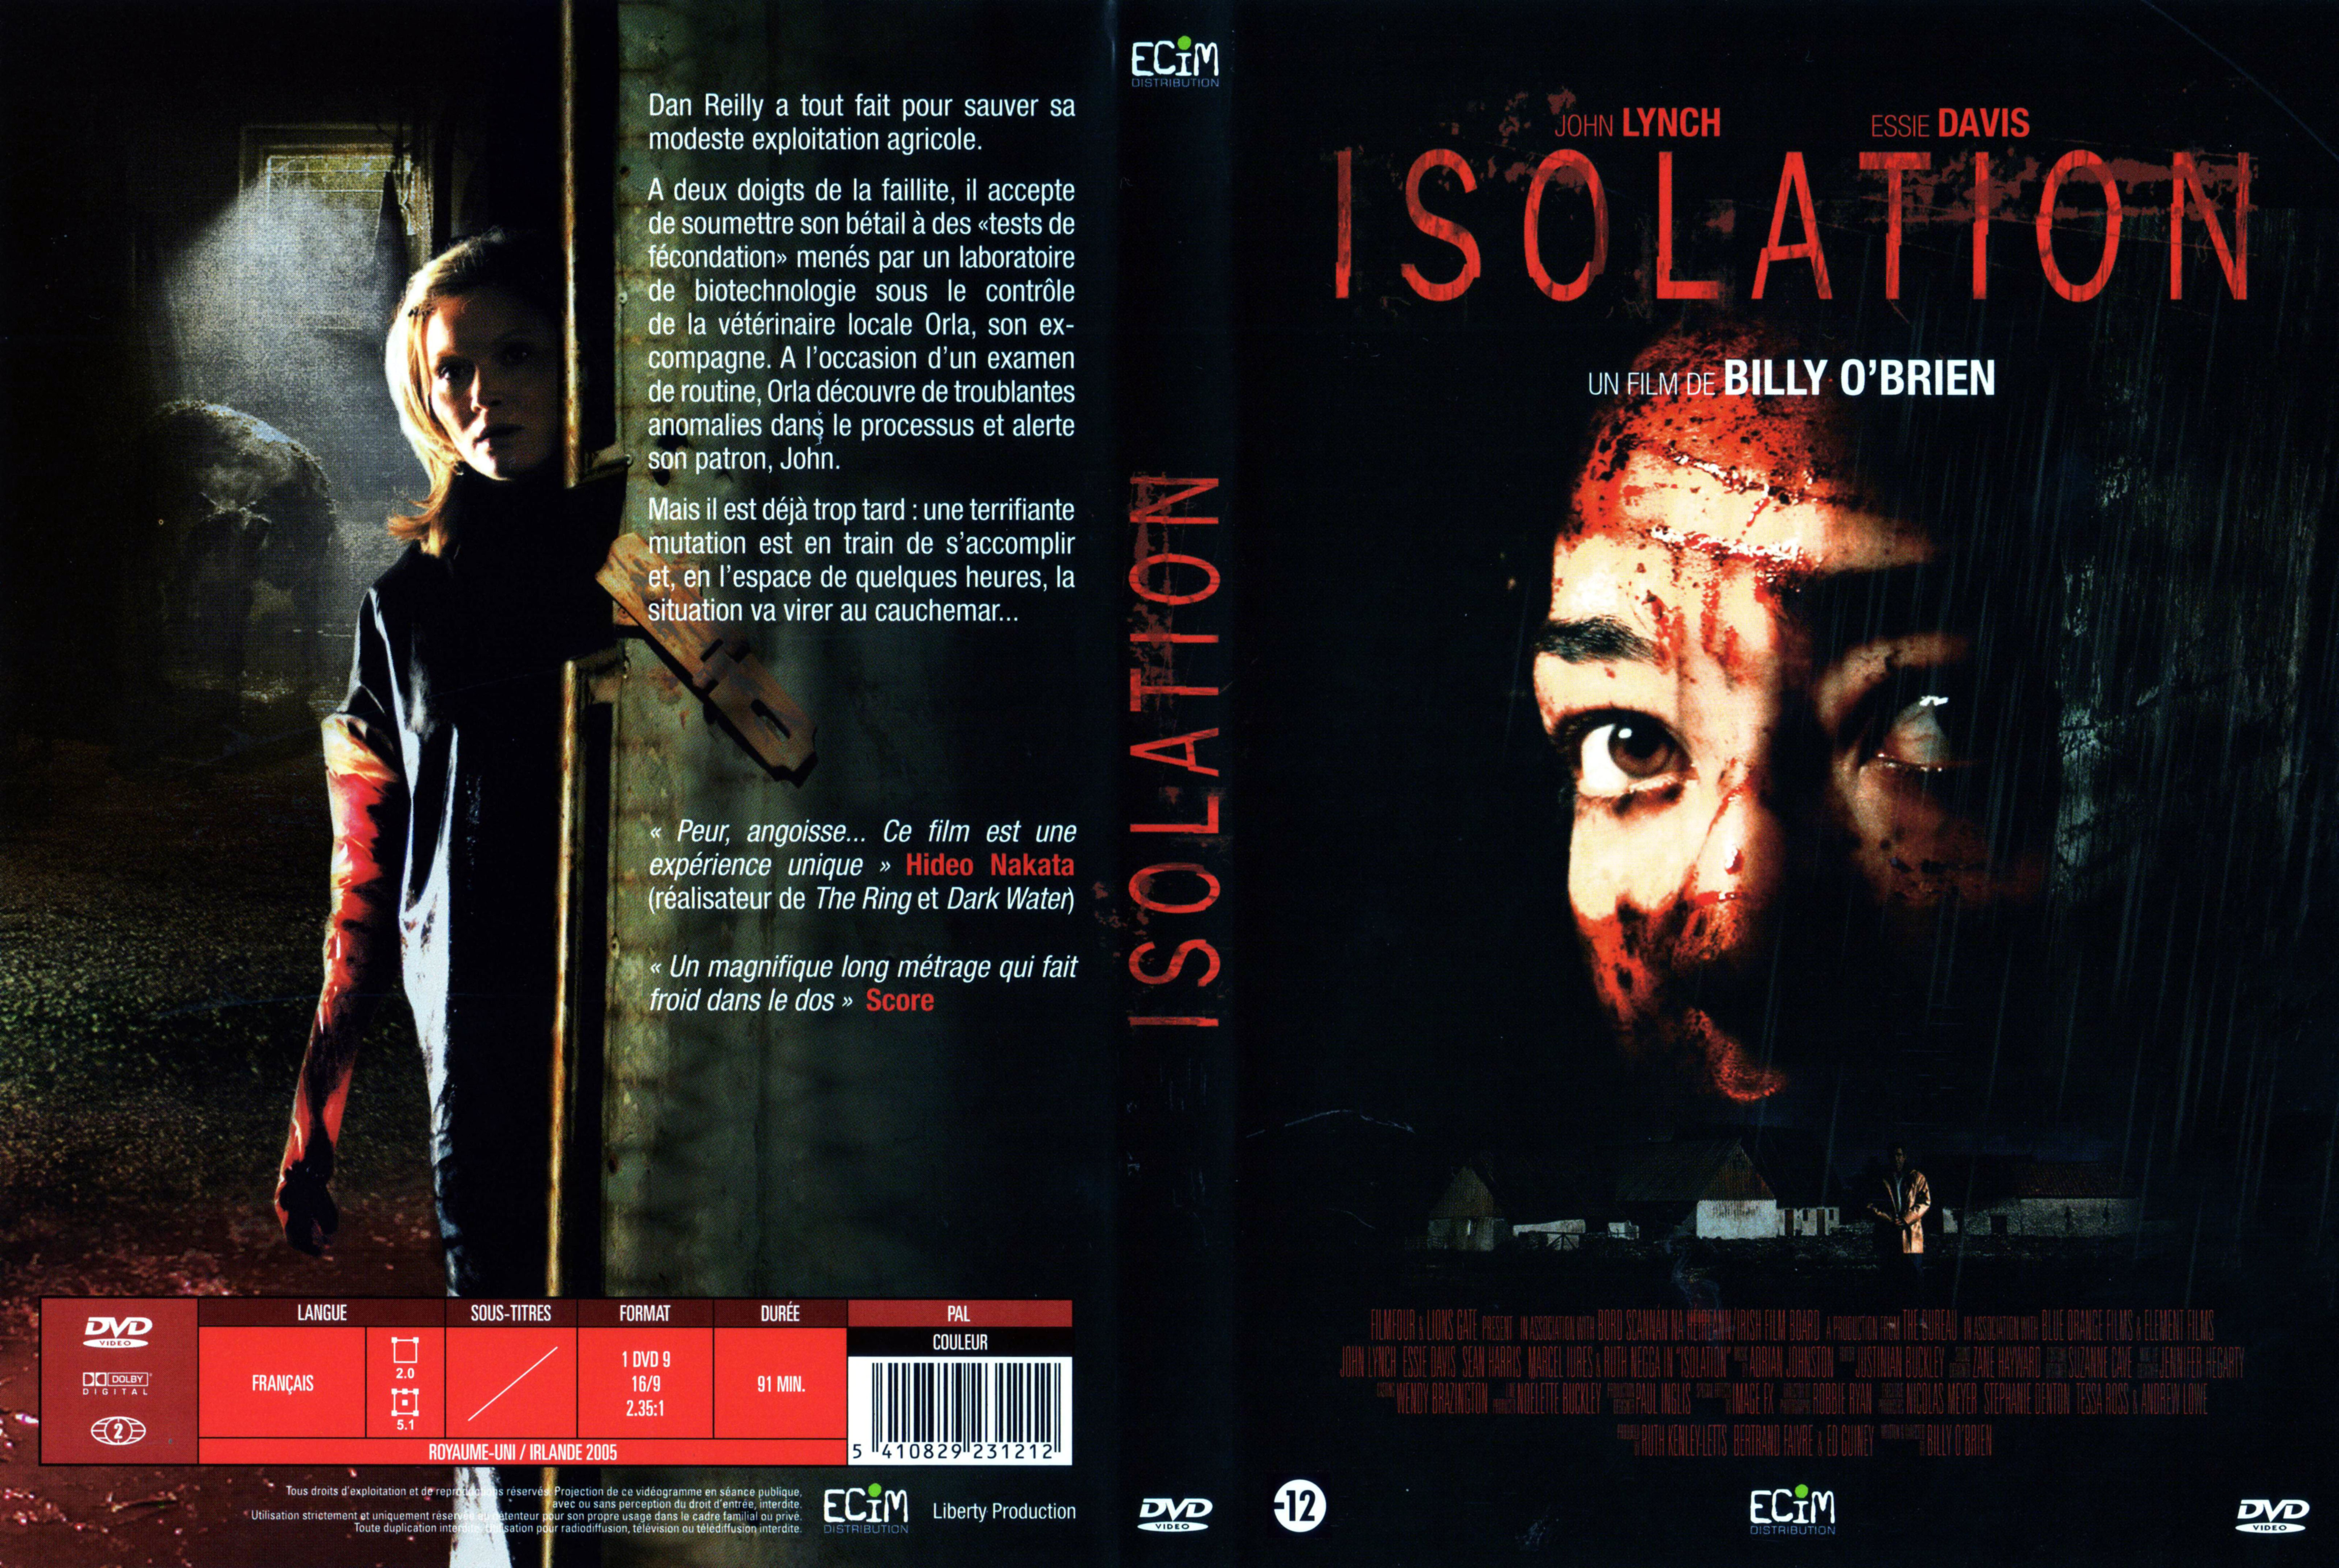 Jaquette DVD Isolation v3